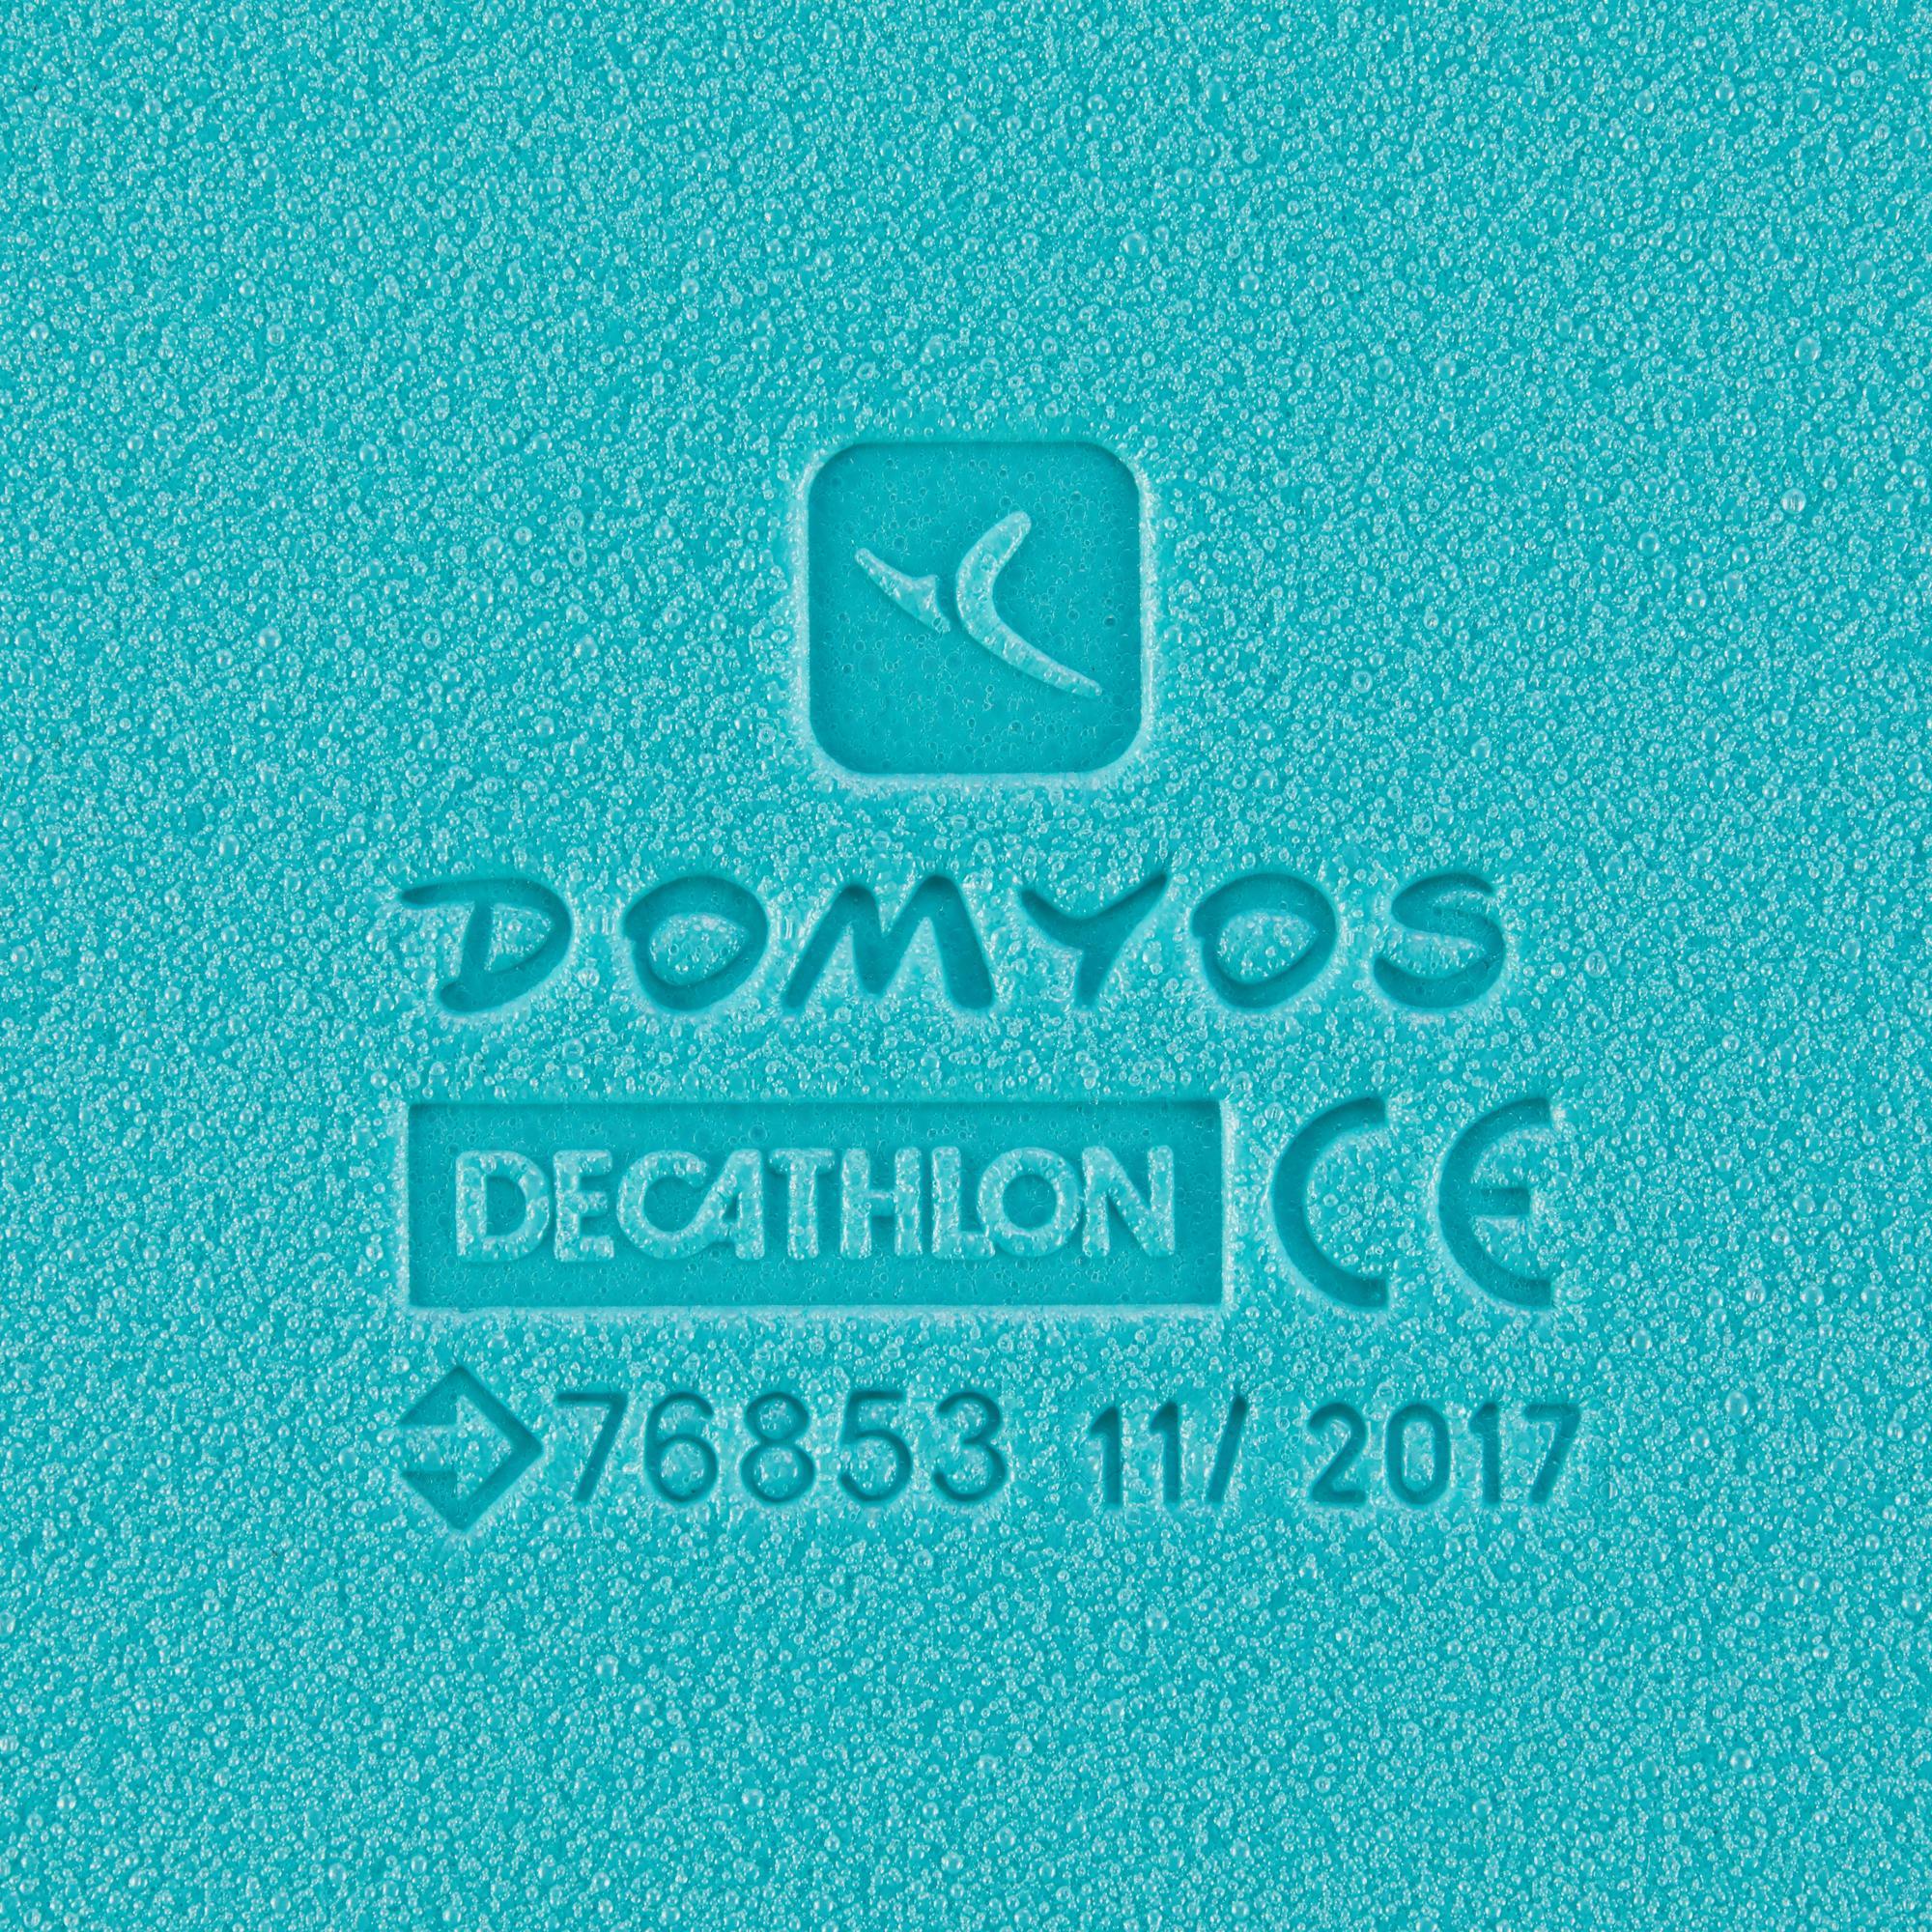 decathlon puzzle mat